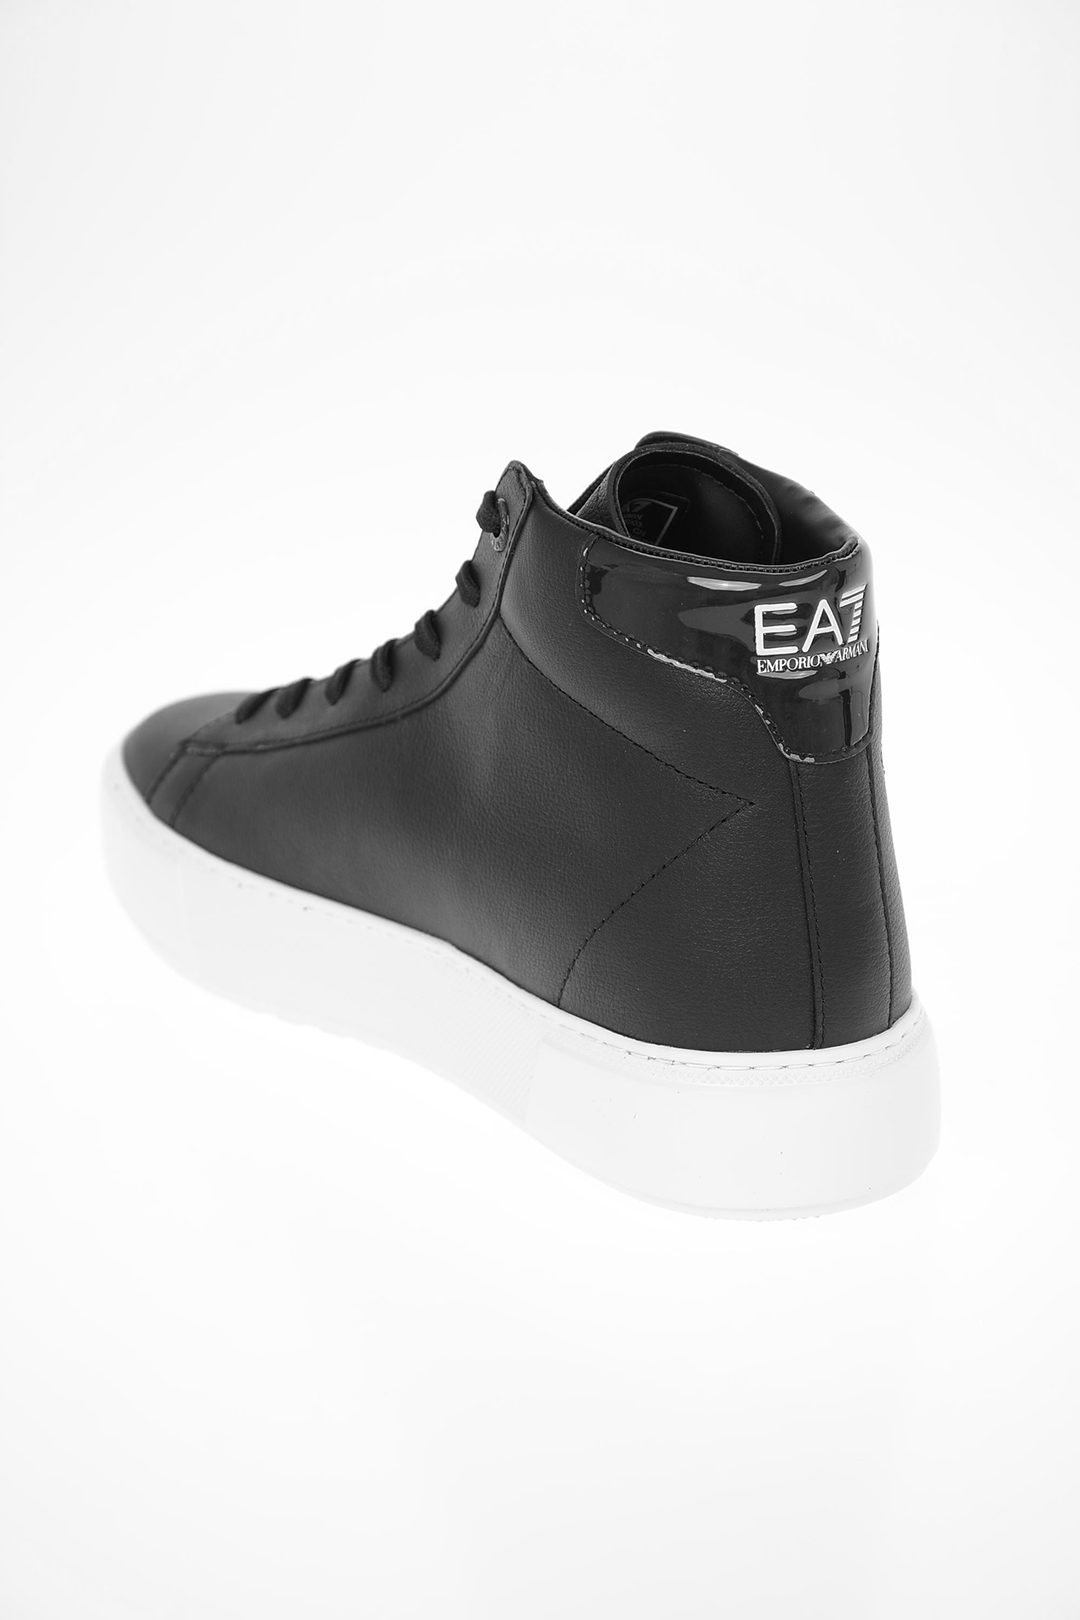 Armani EMPORIO Leather High Top Sneakers men -